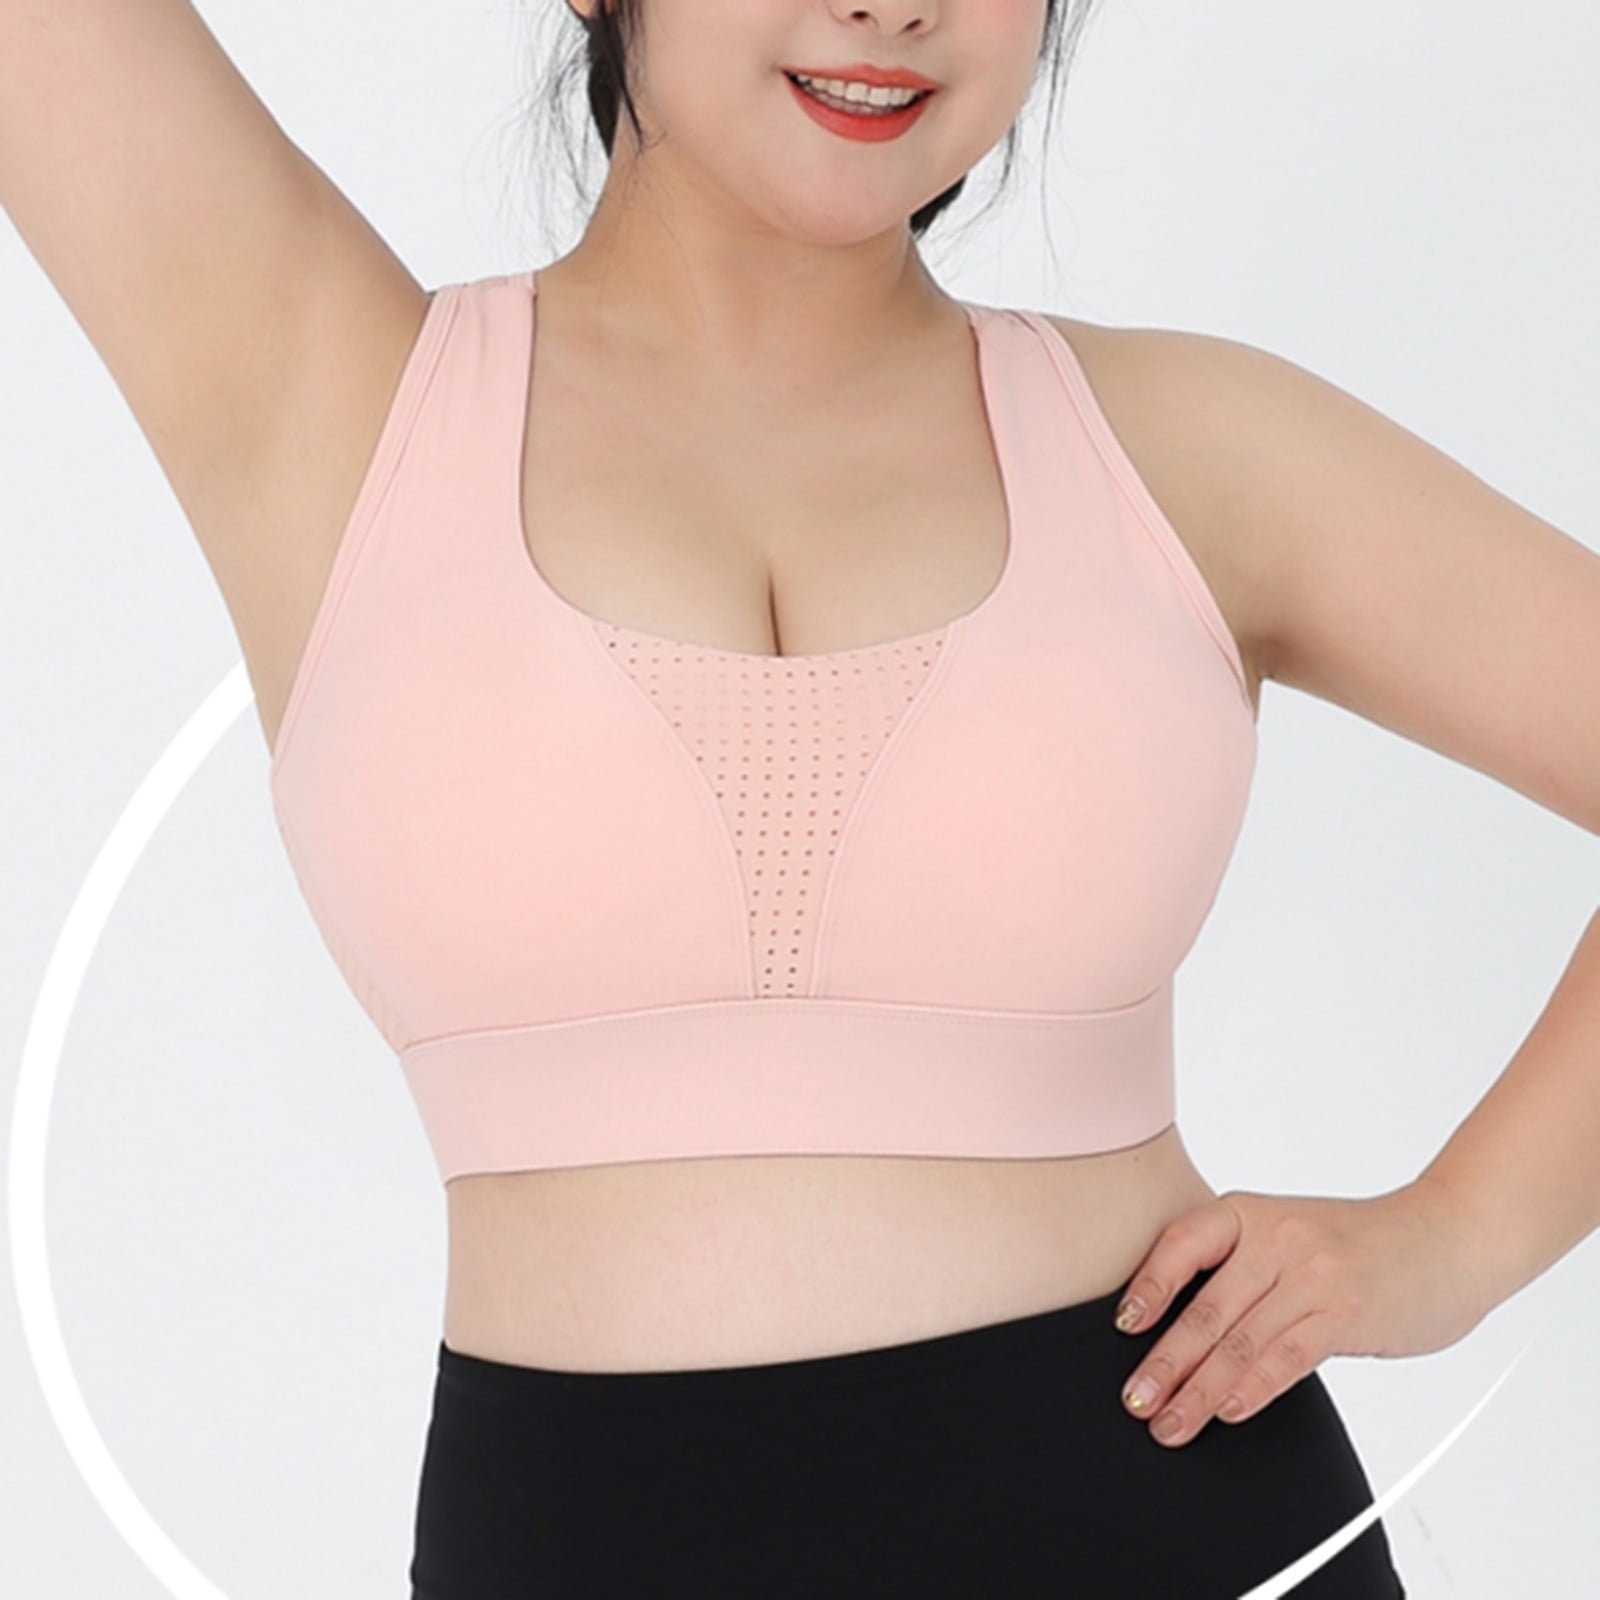 High support bra - Pink, Women's Sports Bras